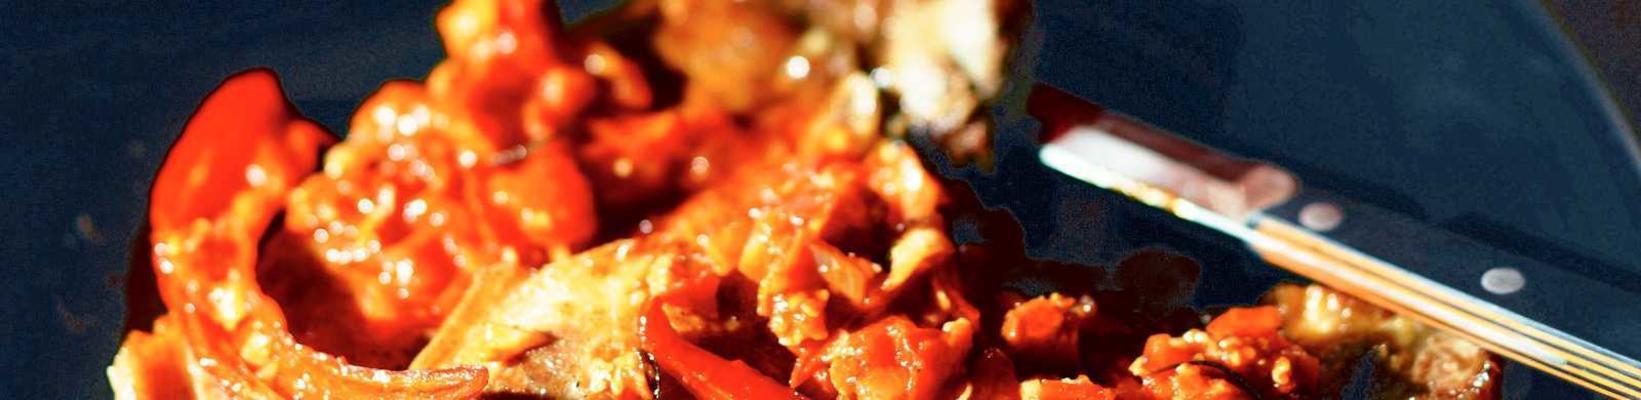 pork chops in a spicy sauce